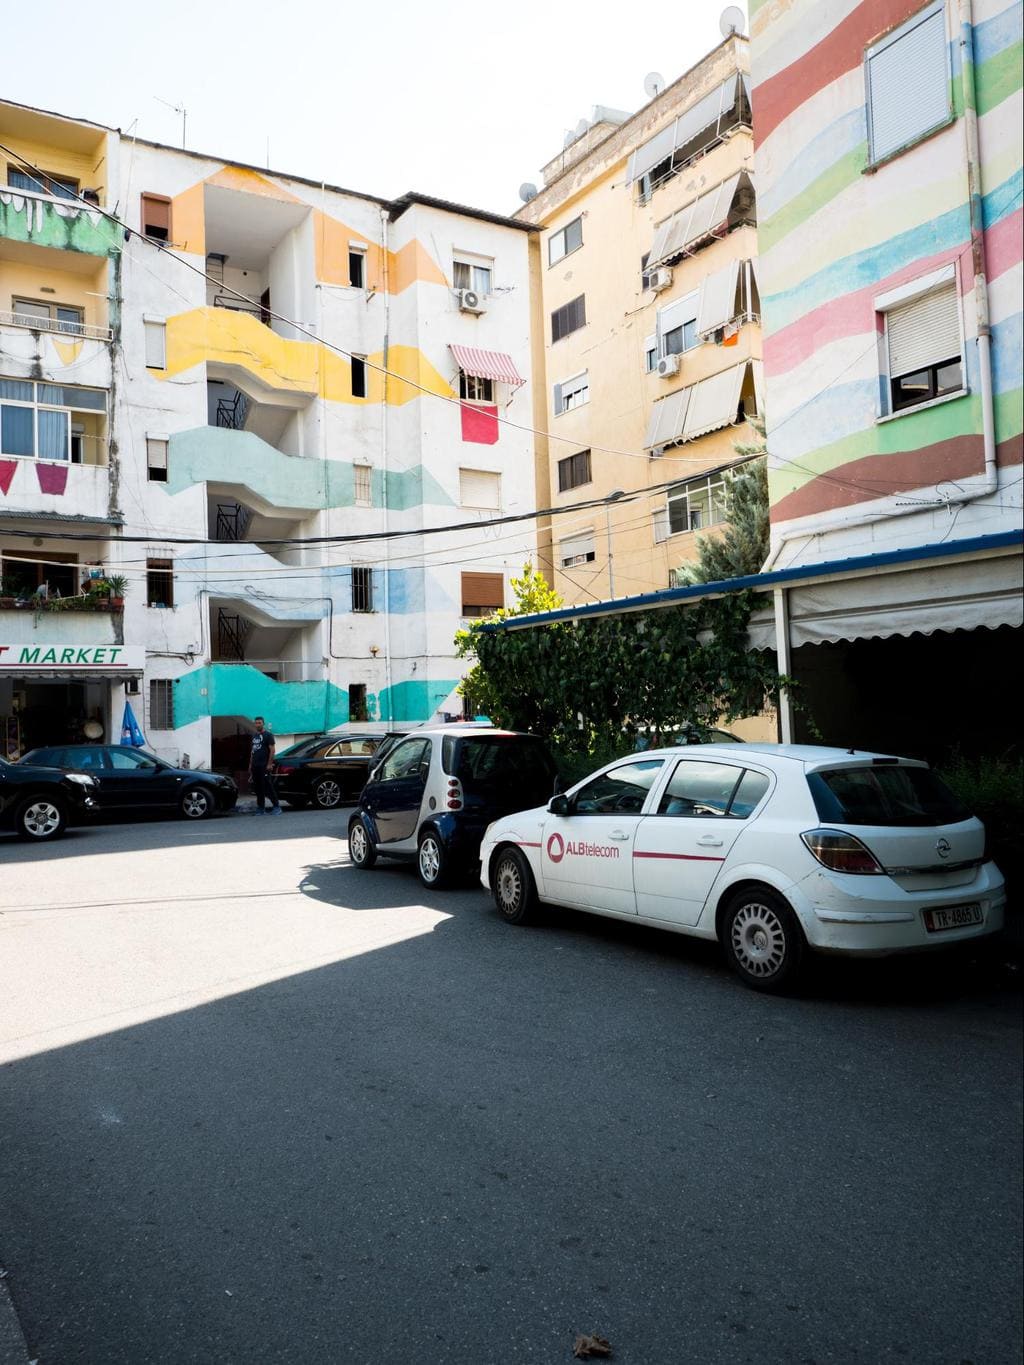 Colorful building facades of Tirana